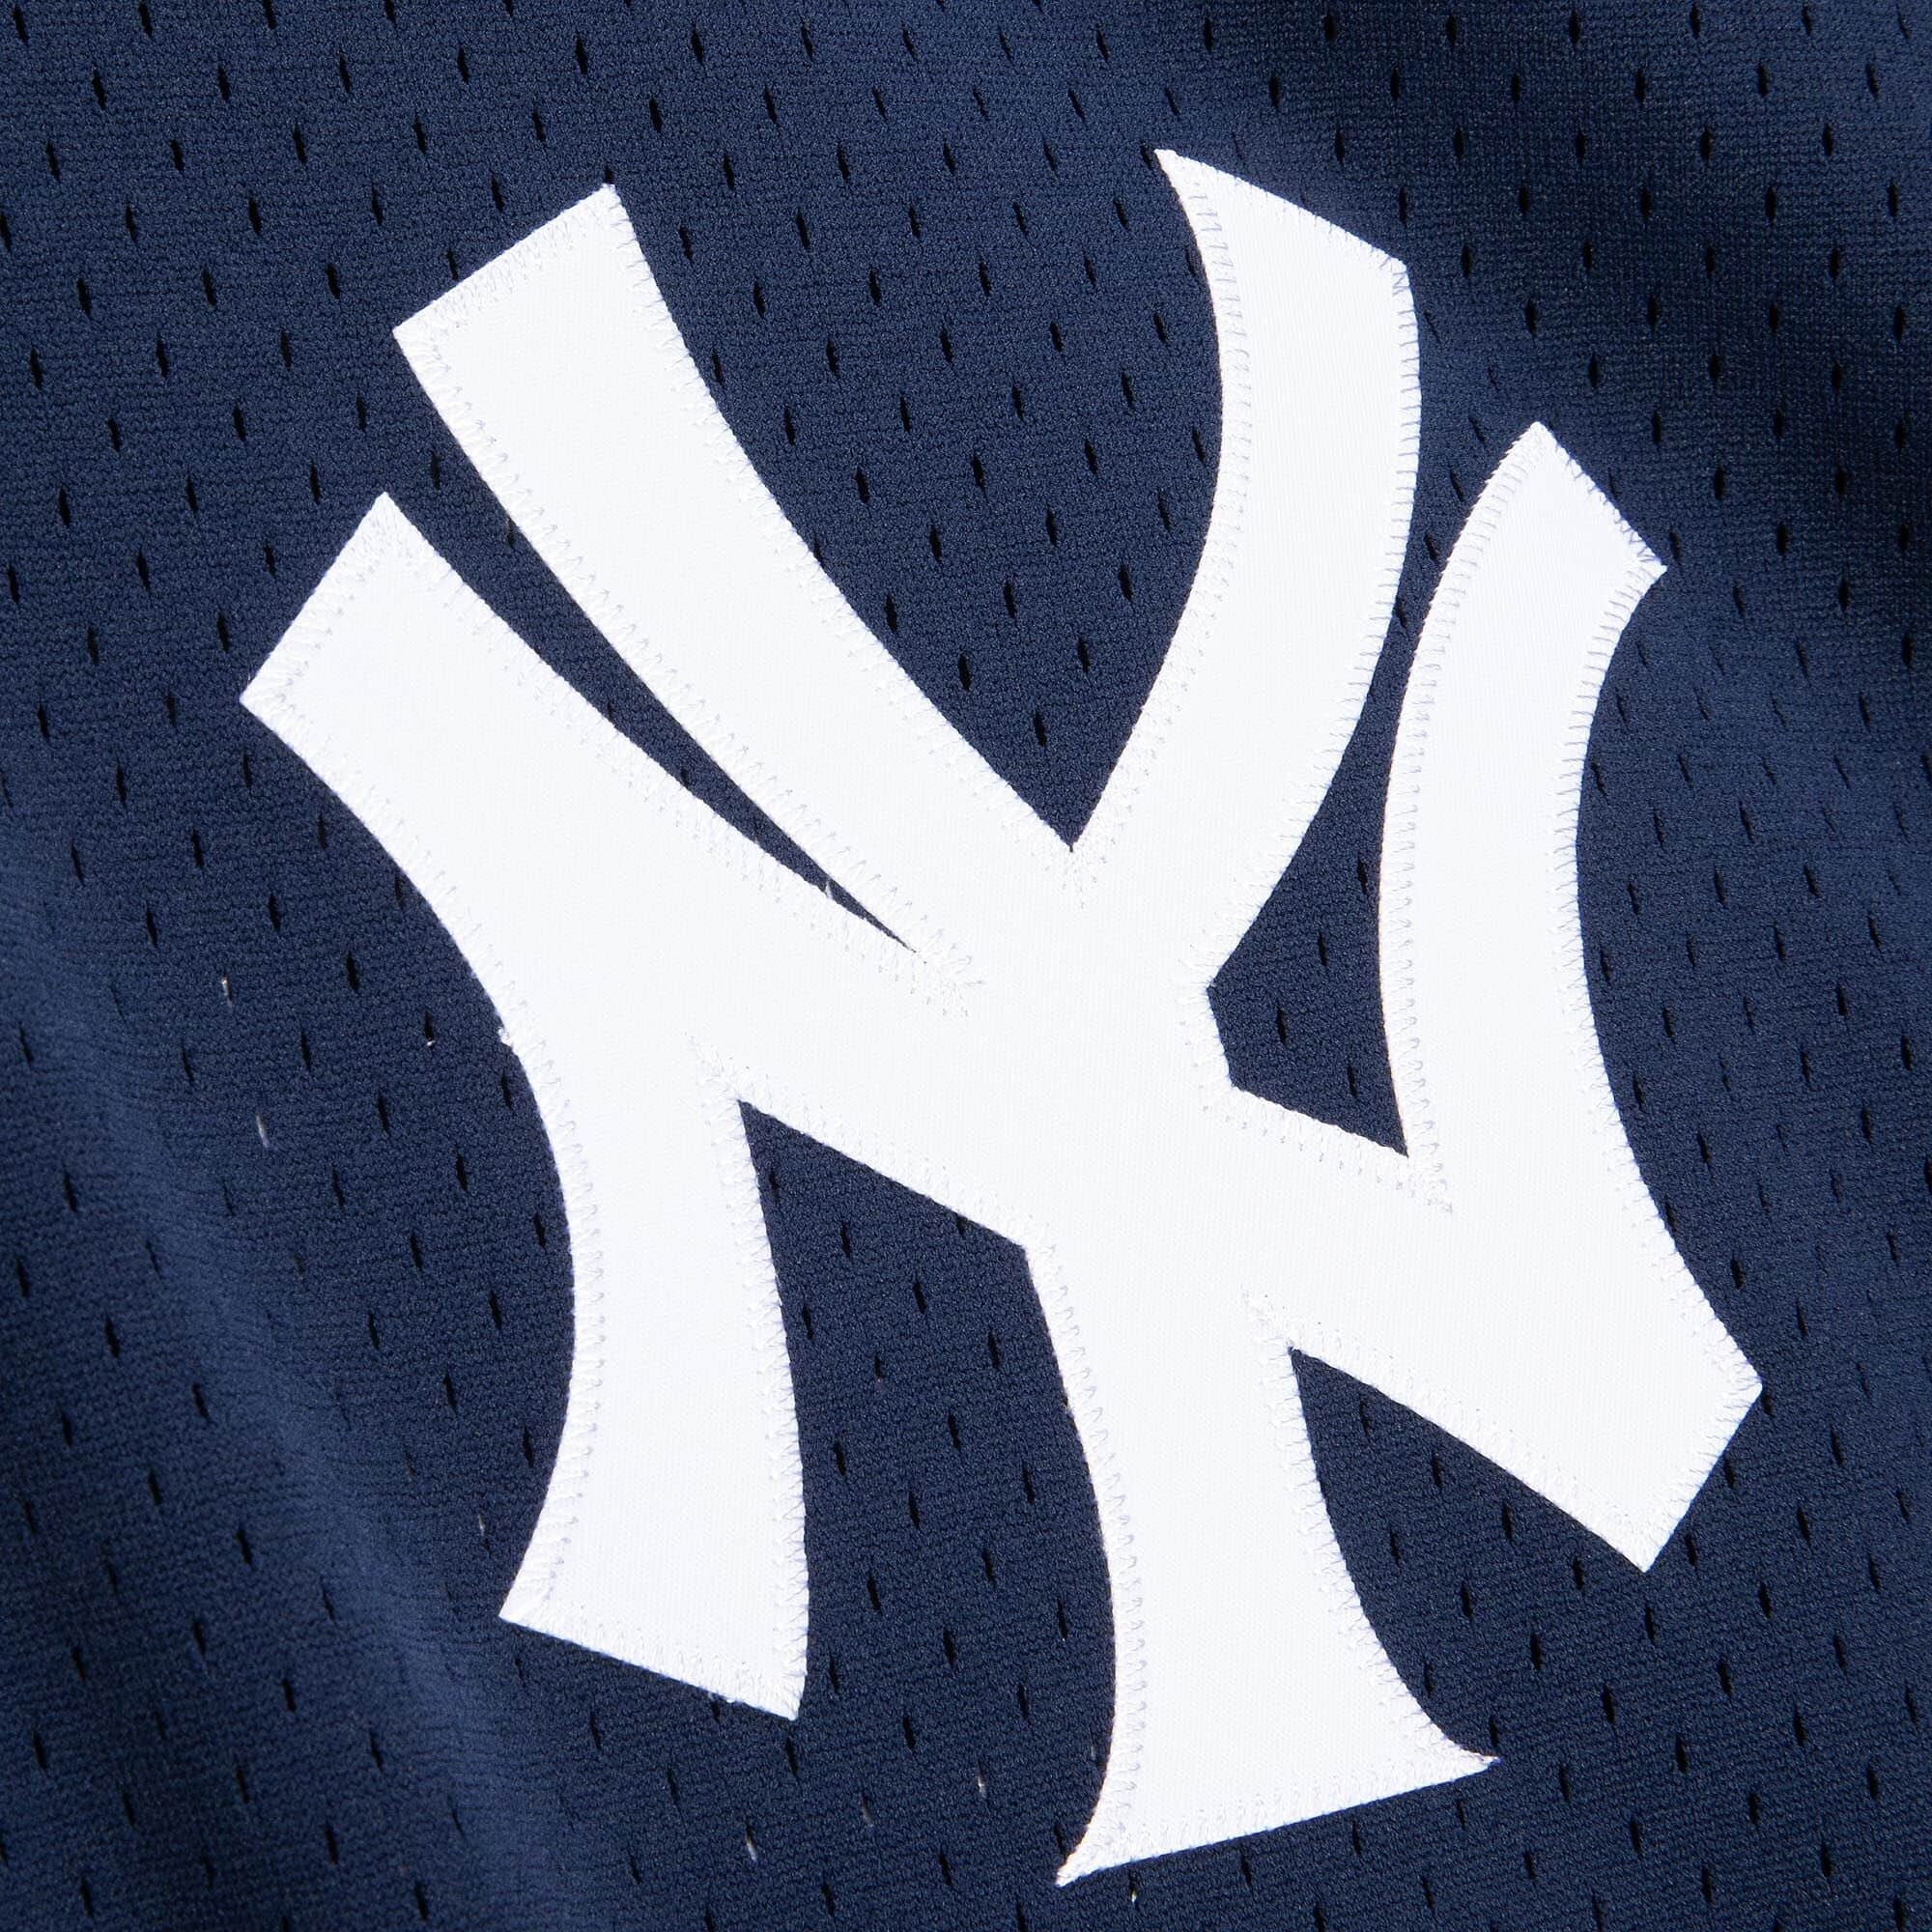 Men's Mitchell & Ness Derek Jeter Navy New York Yankees Cooperstown  Collection Mesh Batting Practice Button-Up Jersey